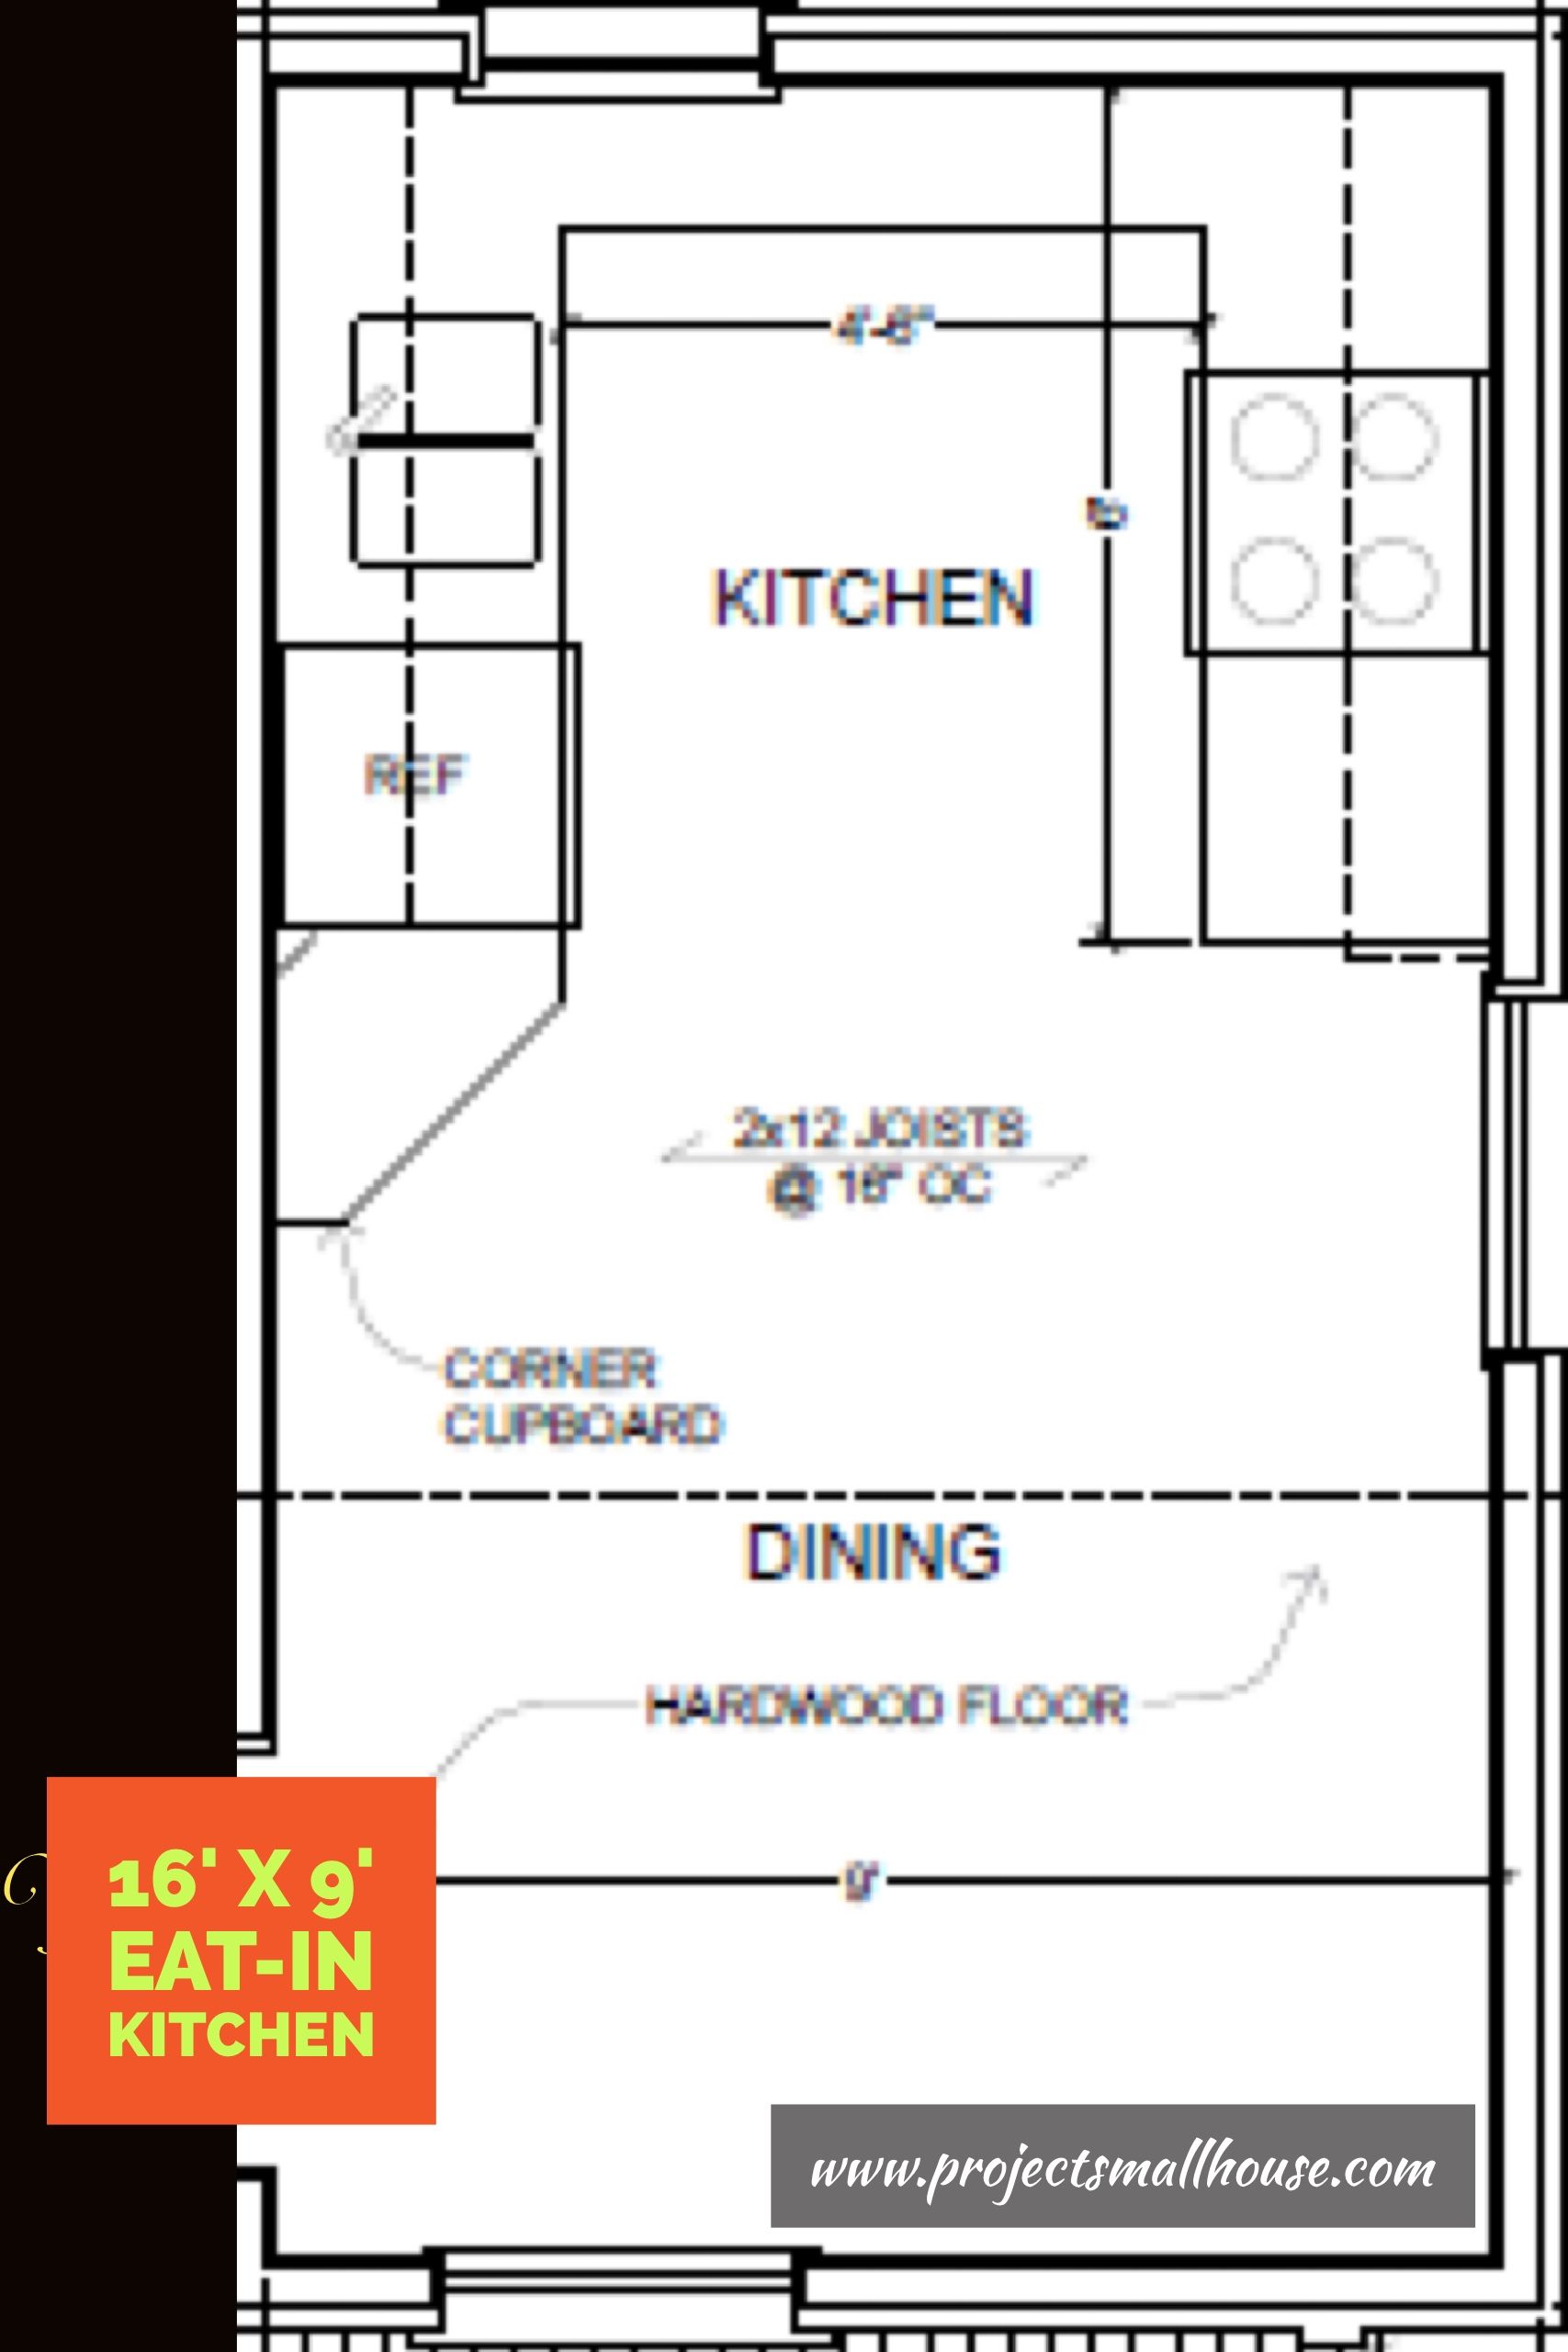 Project Small House Kitchen Floor Plan Virginia